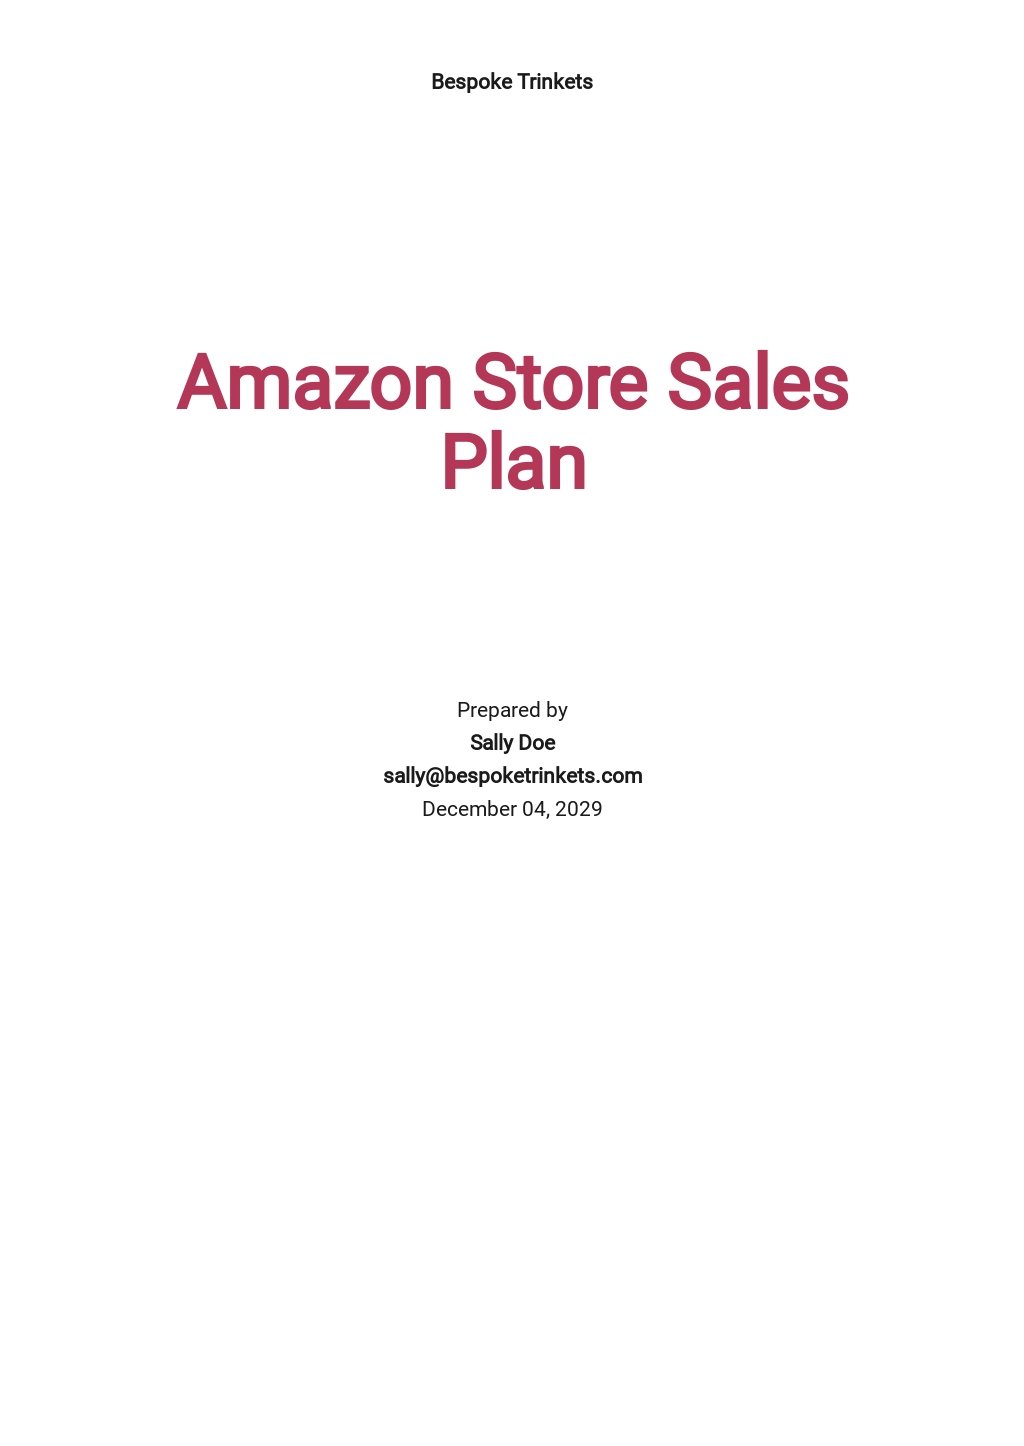 Amazon Store Sales Plan Template.jpe